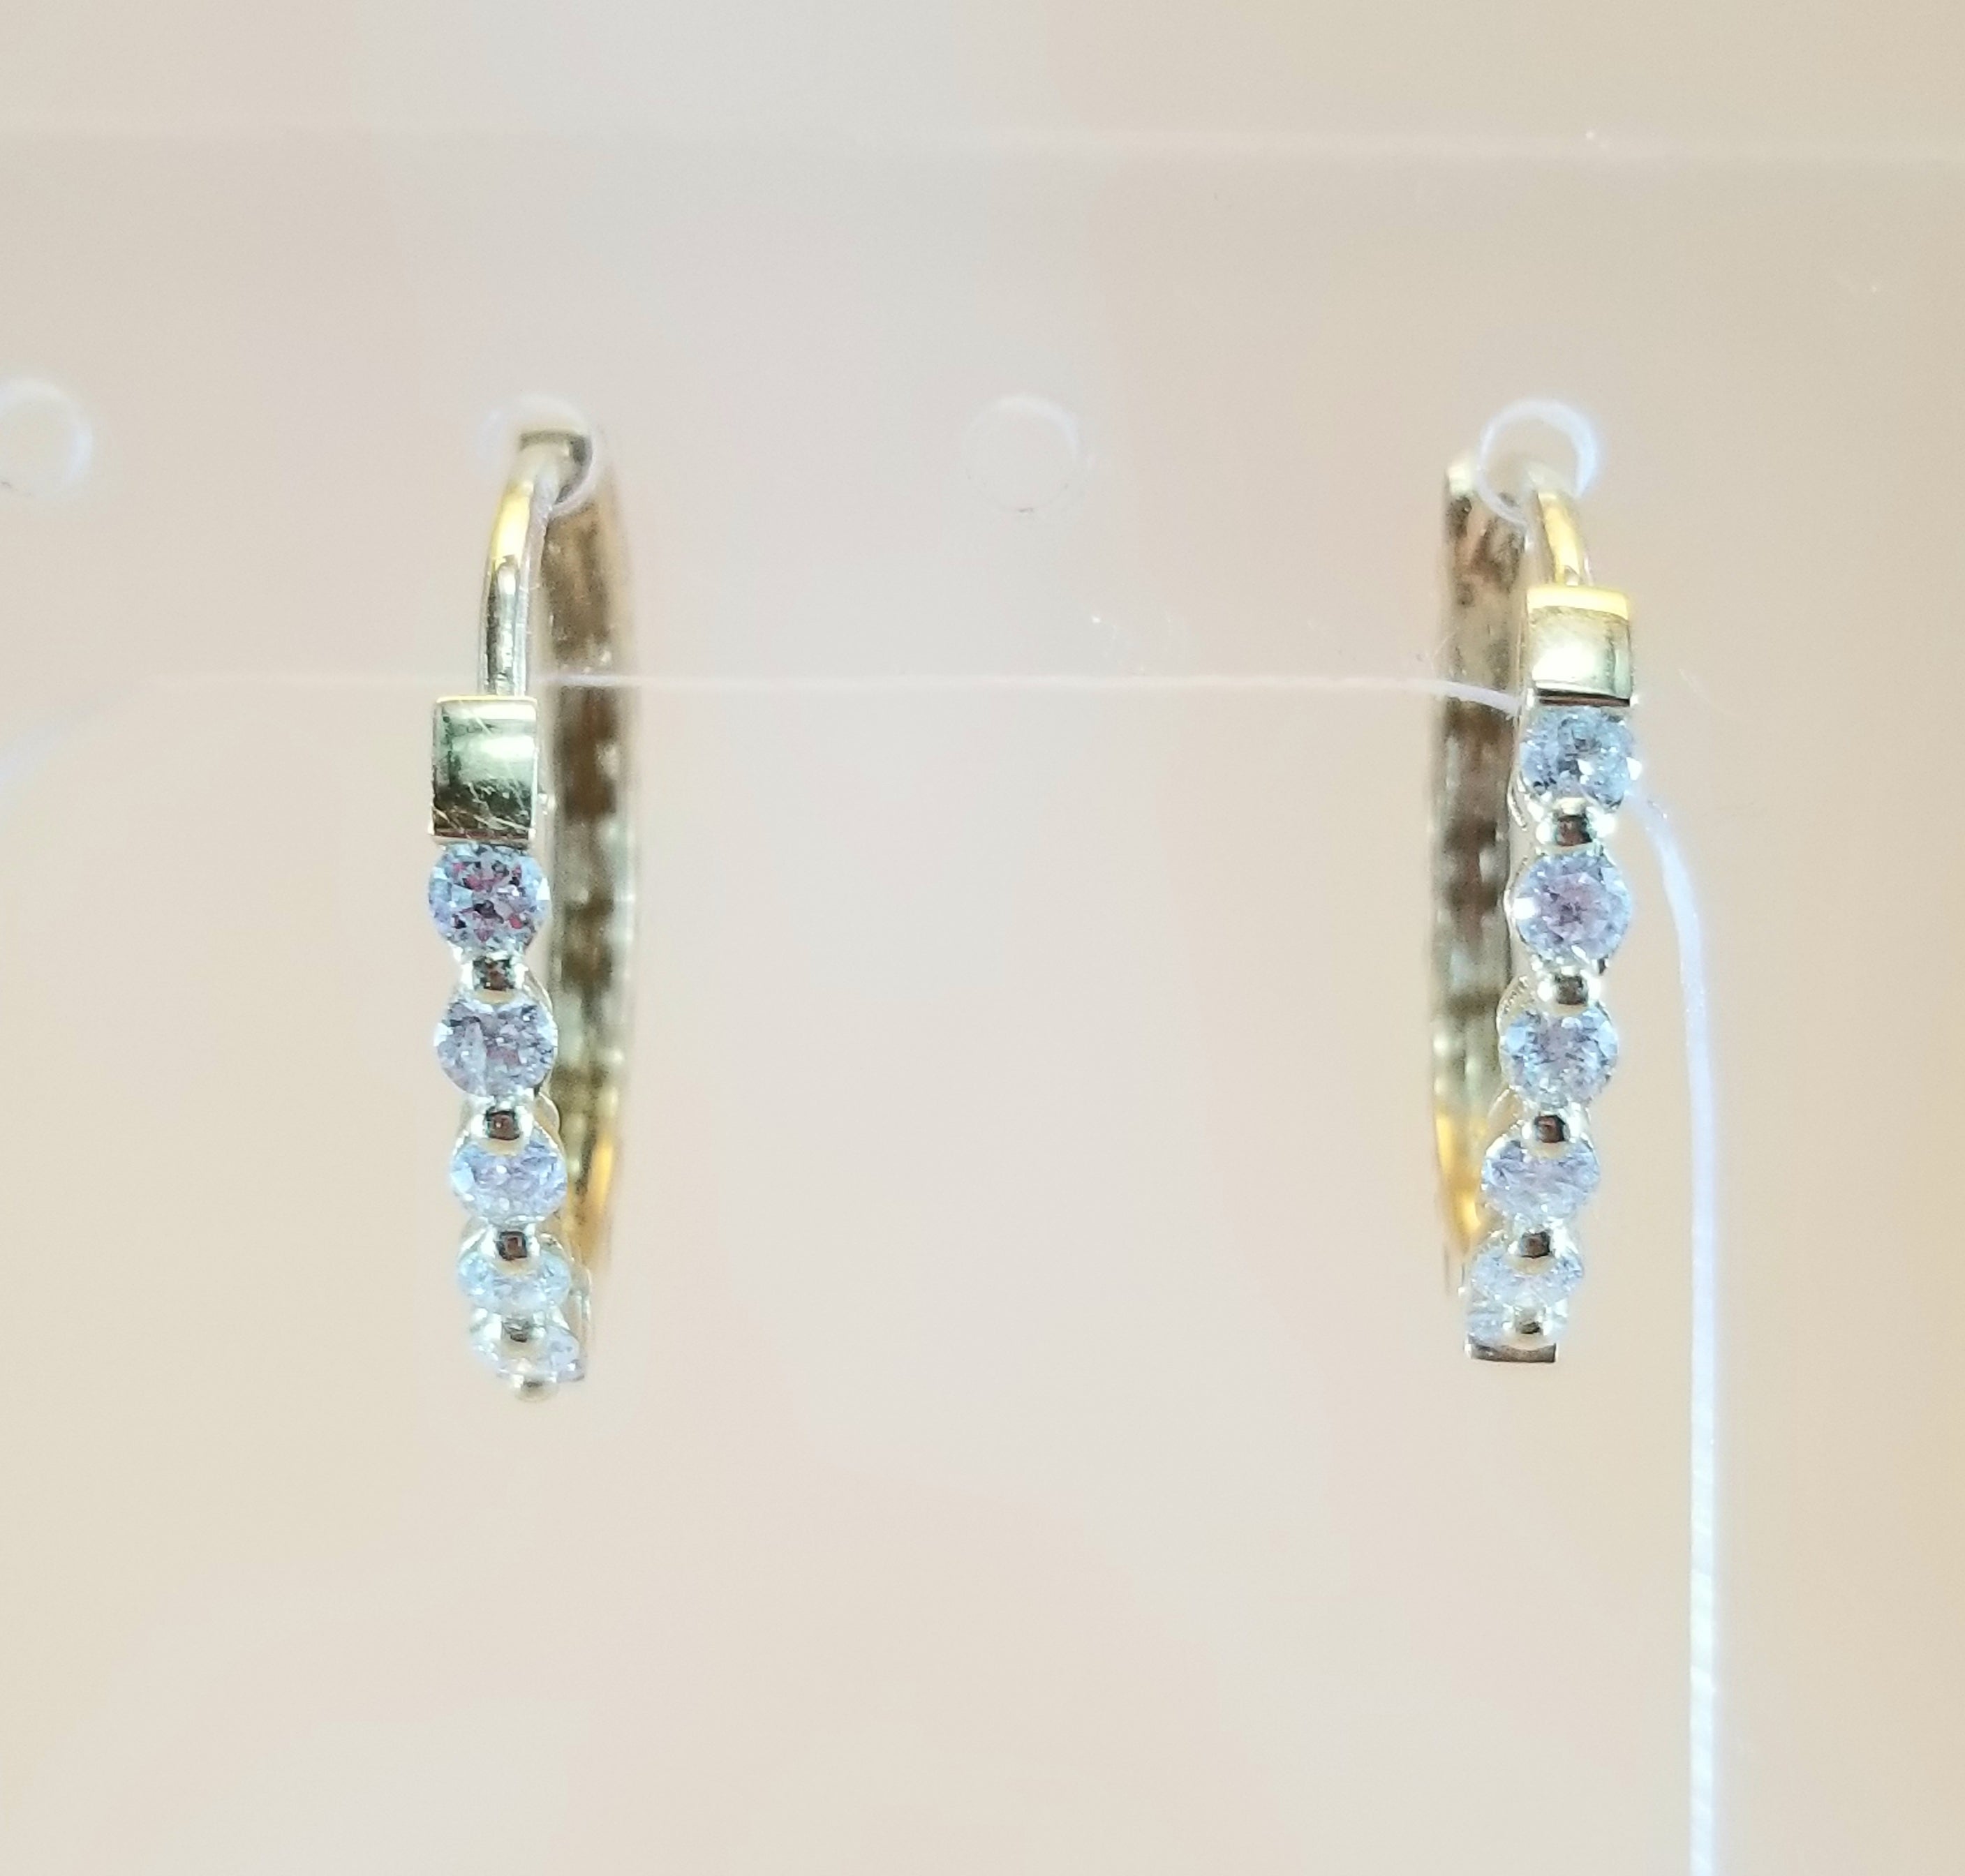 14k Yellow Gold & Diamond Huggie Earrings